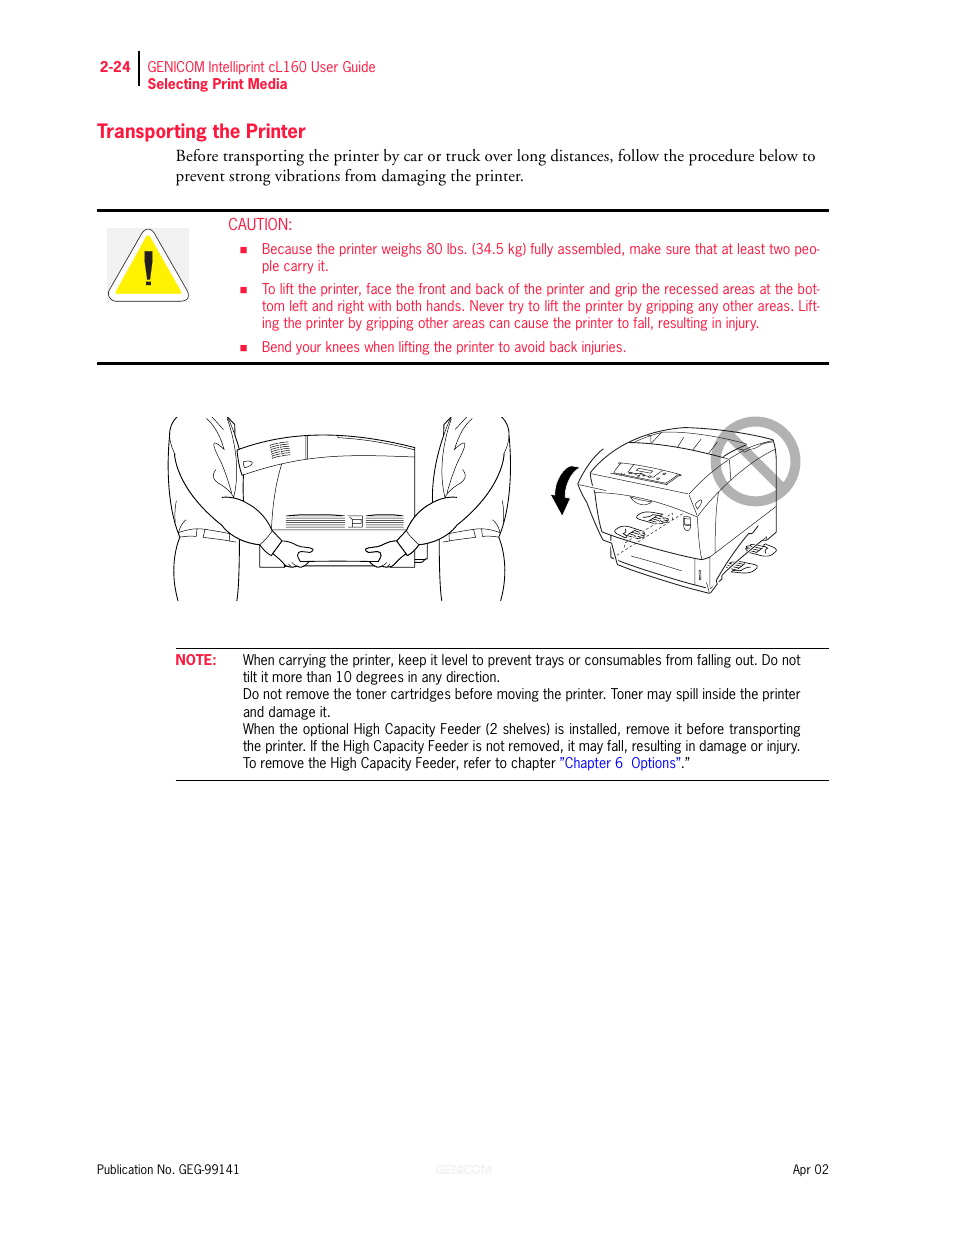 Transporting the printer | Genicom cL160 User Manual | Page 76 / 216